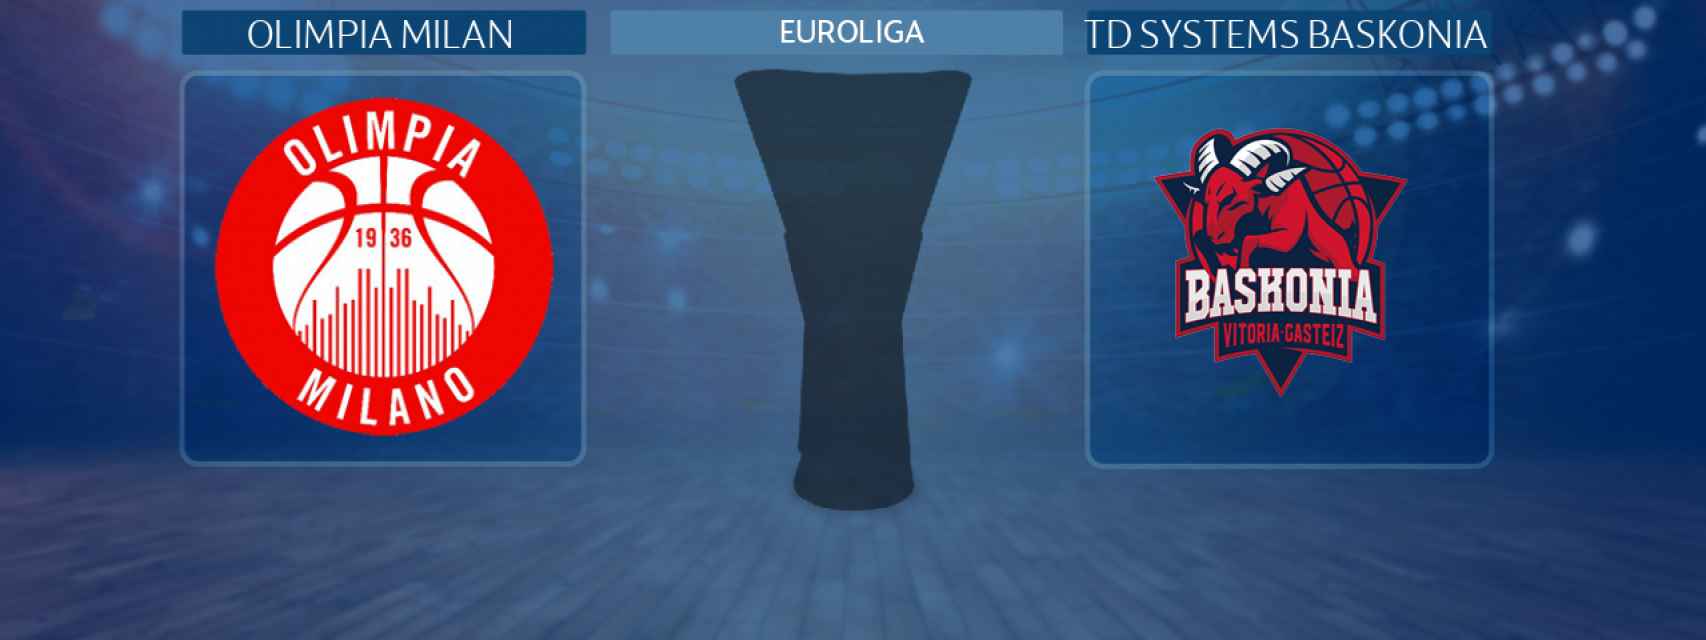 Olimpia Milan - TD Systems Baskonia, partido de la Euroliga